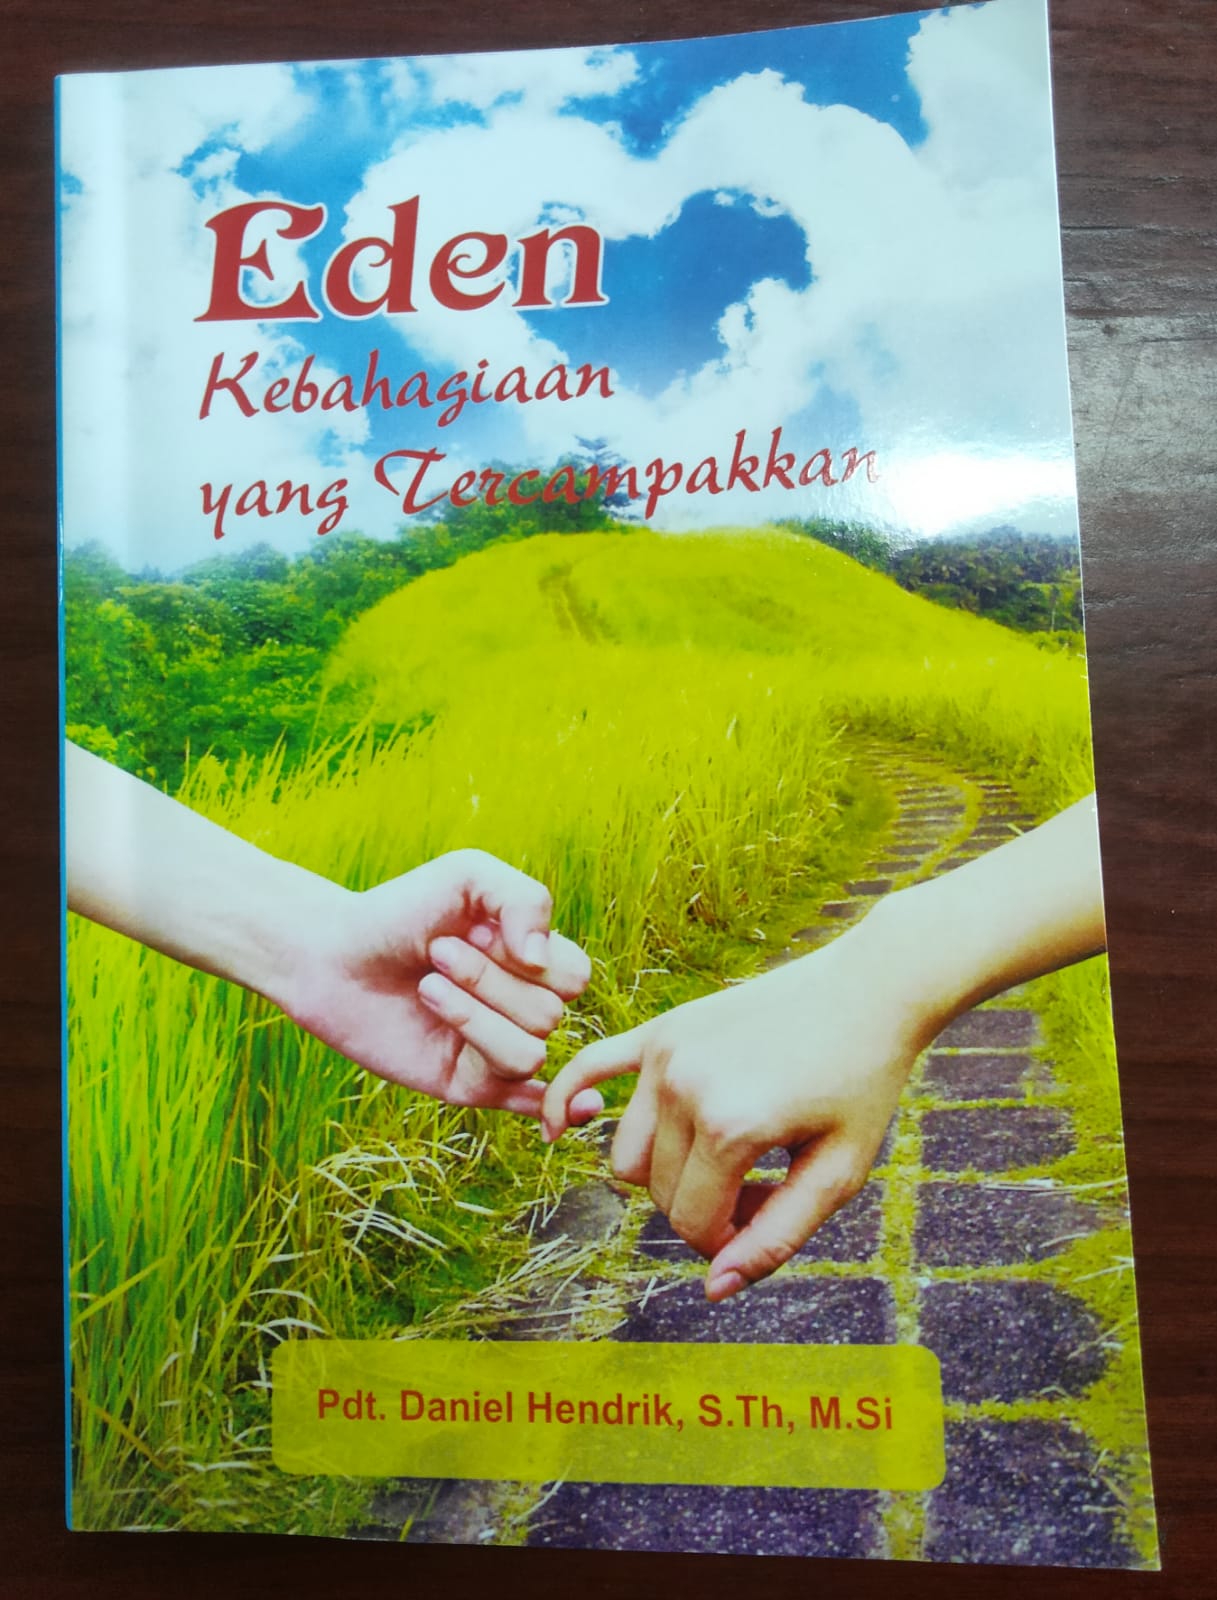 Eden, kebahagiaan yang tercampakkan :  perenungan tentang rahasia kebahagiaan hidup rumah tangga kristen